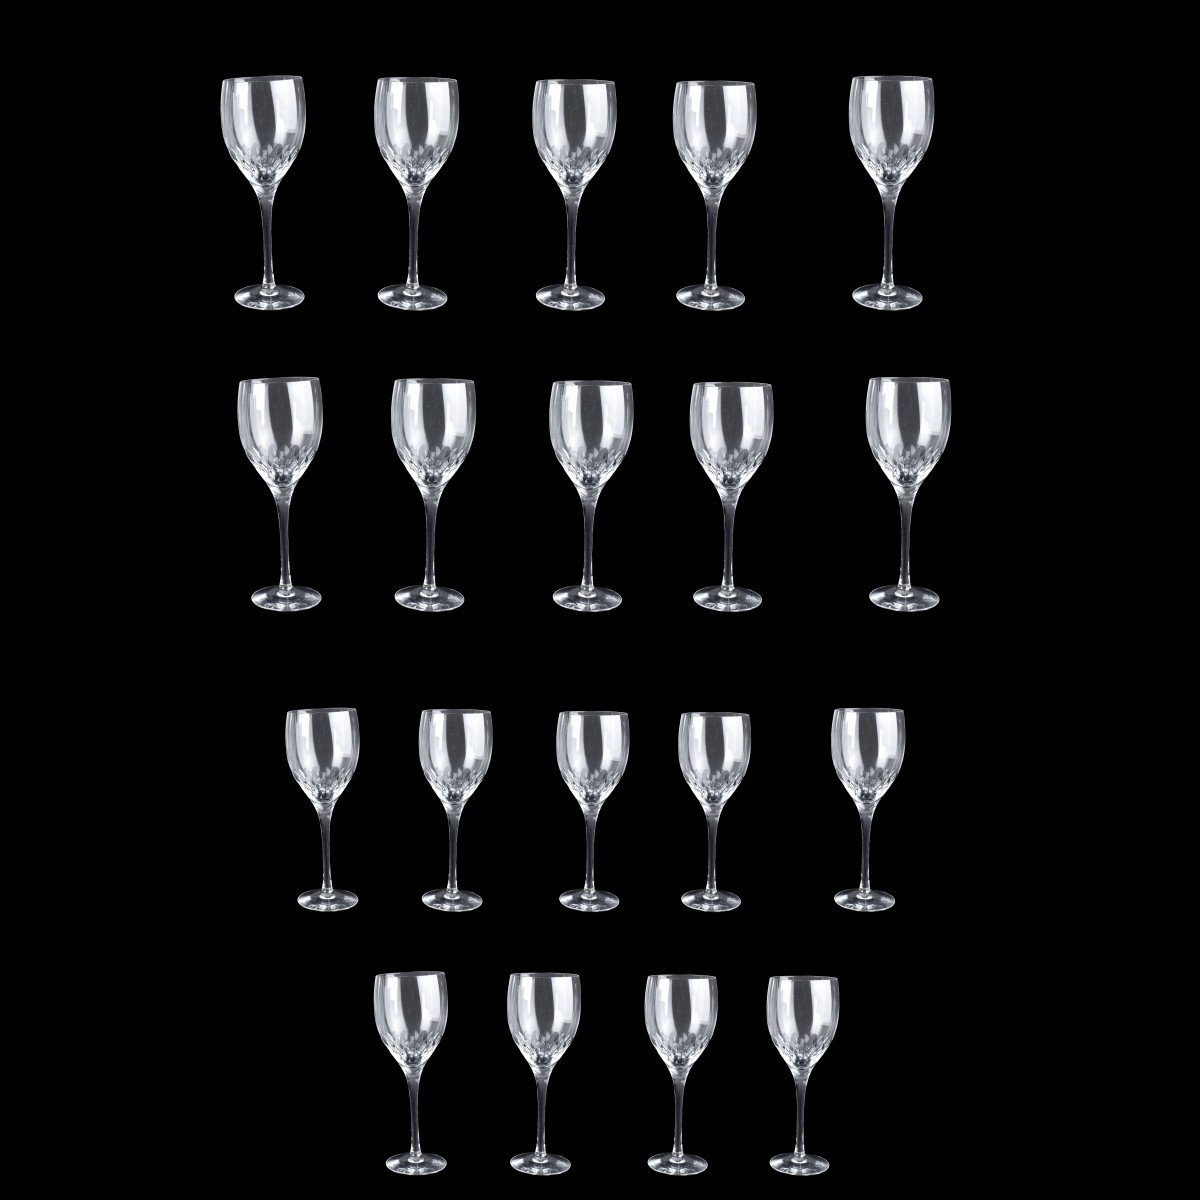 19 Orrefors Prelude Crystal Glasses